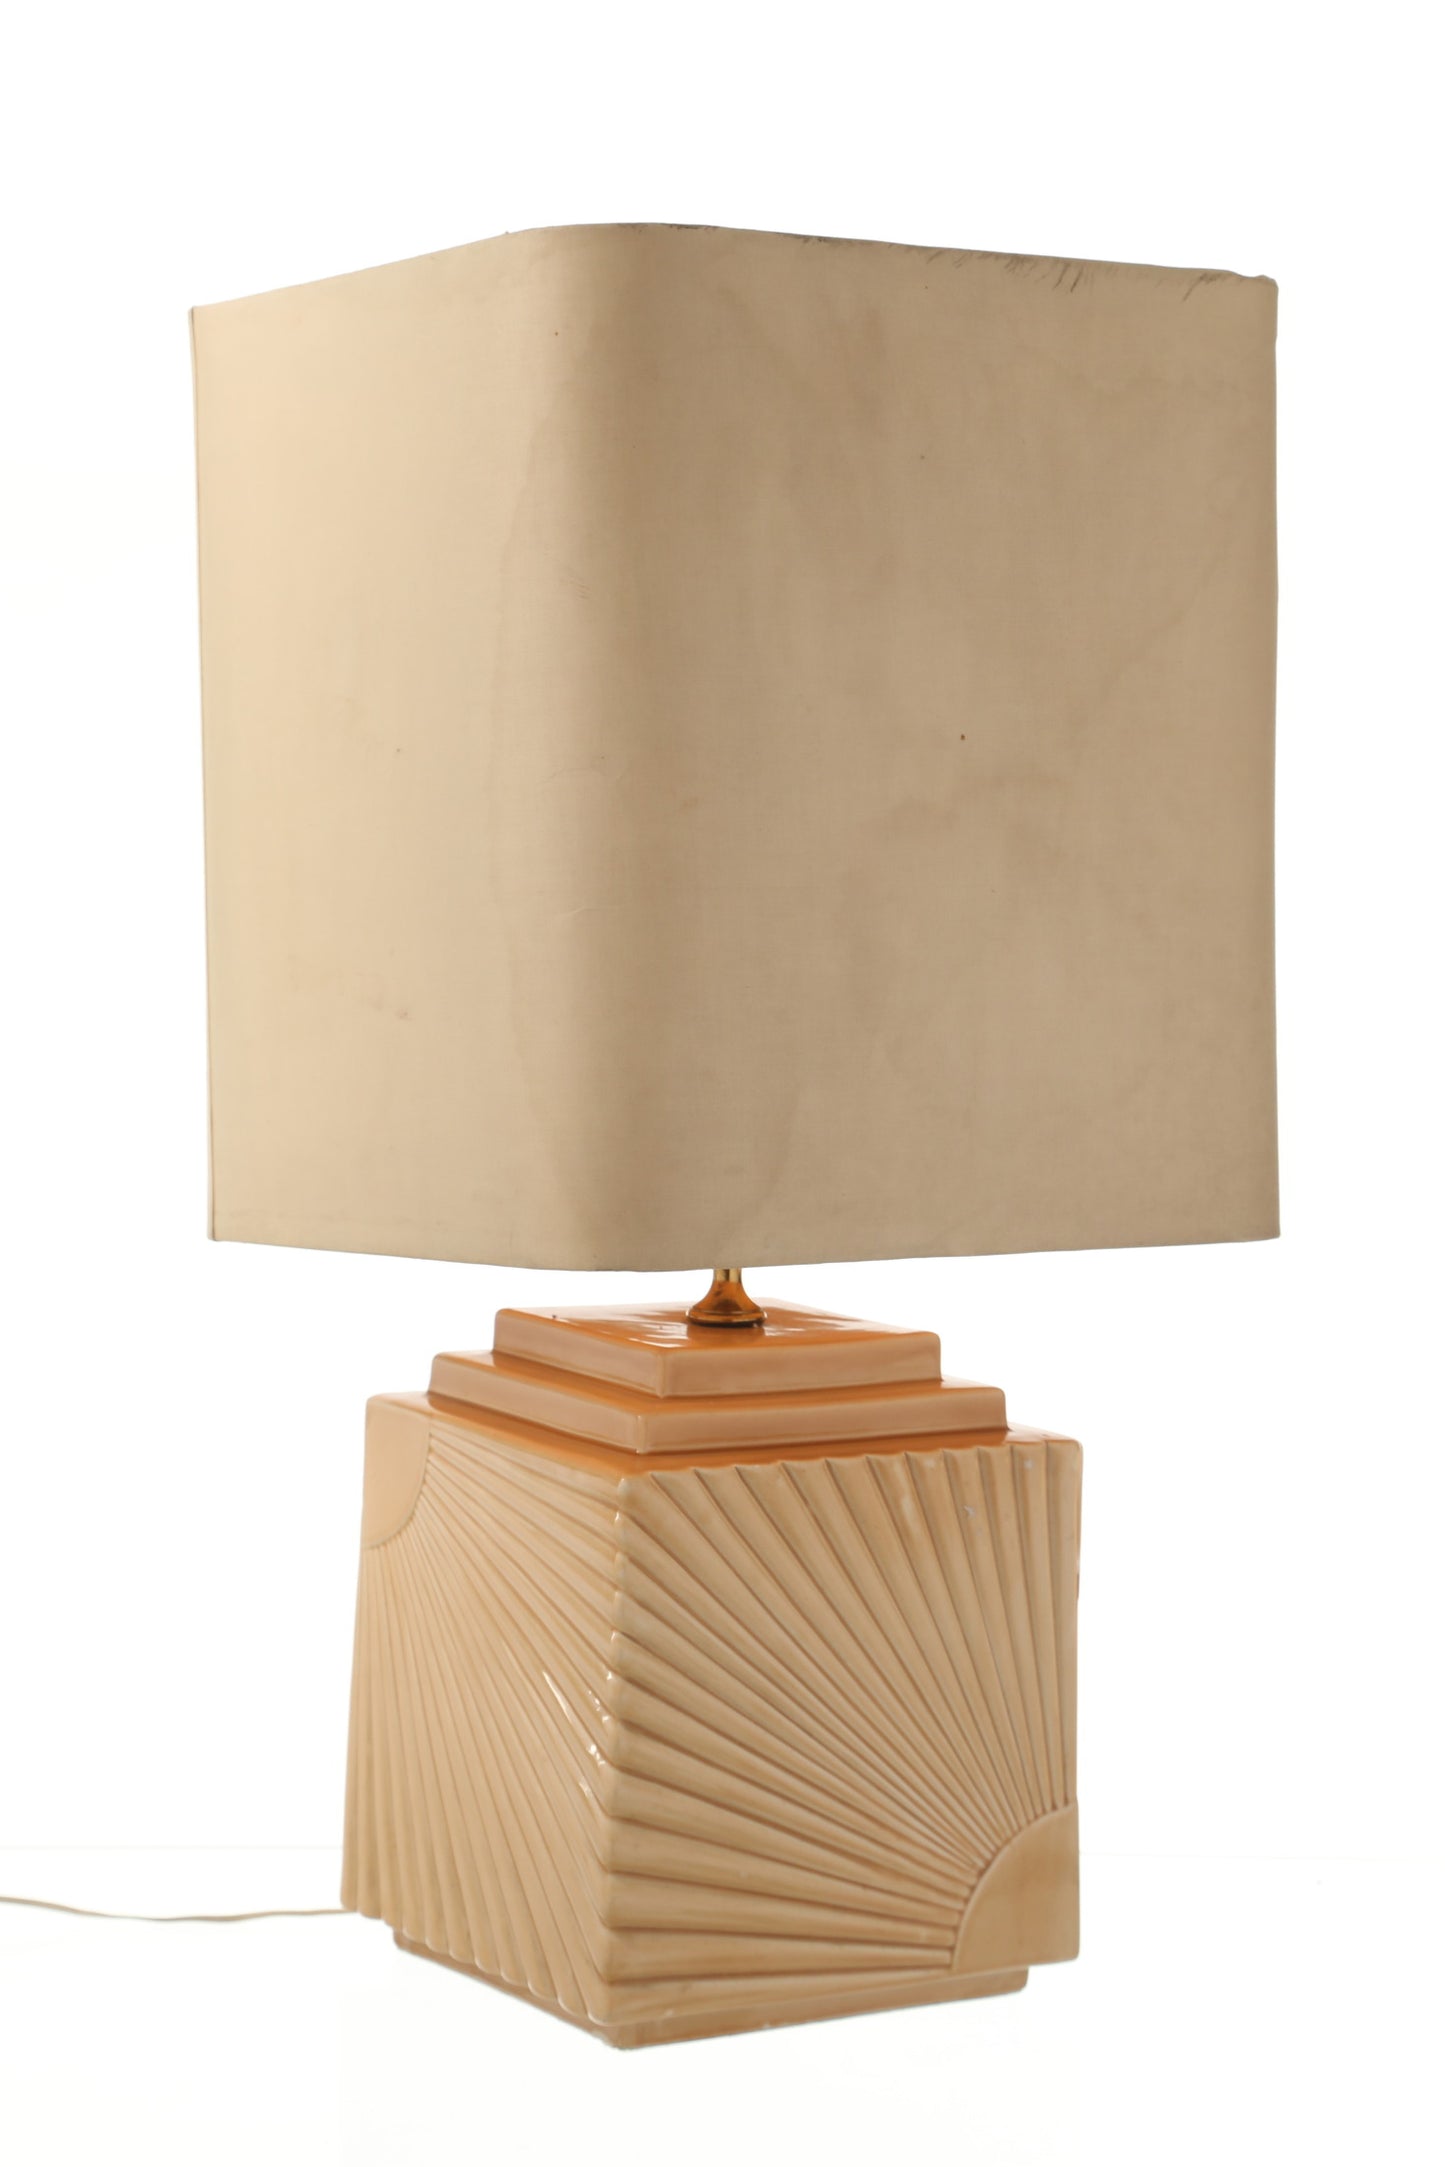 Orange ceramic table lamp from the 60s